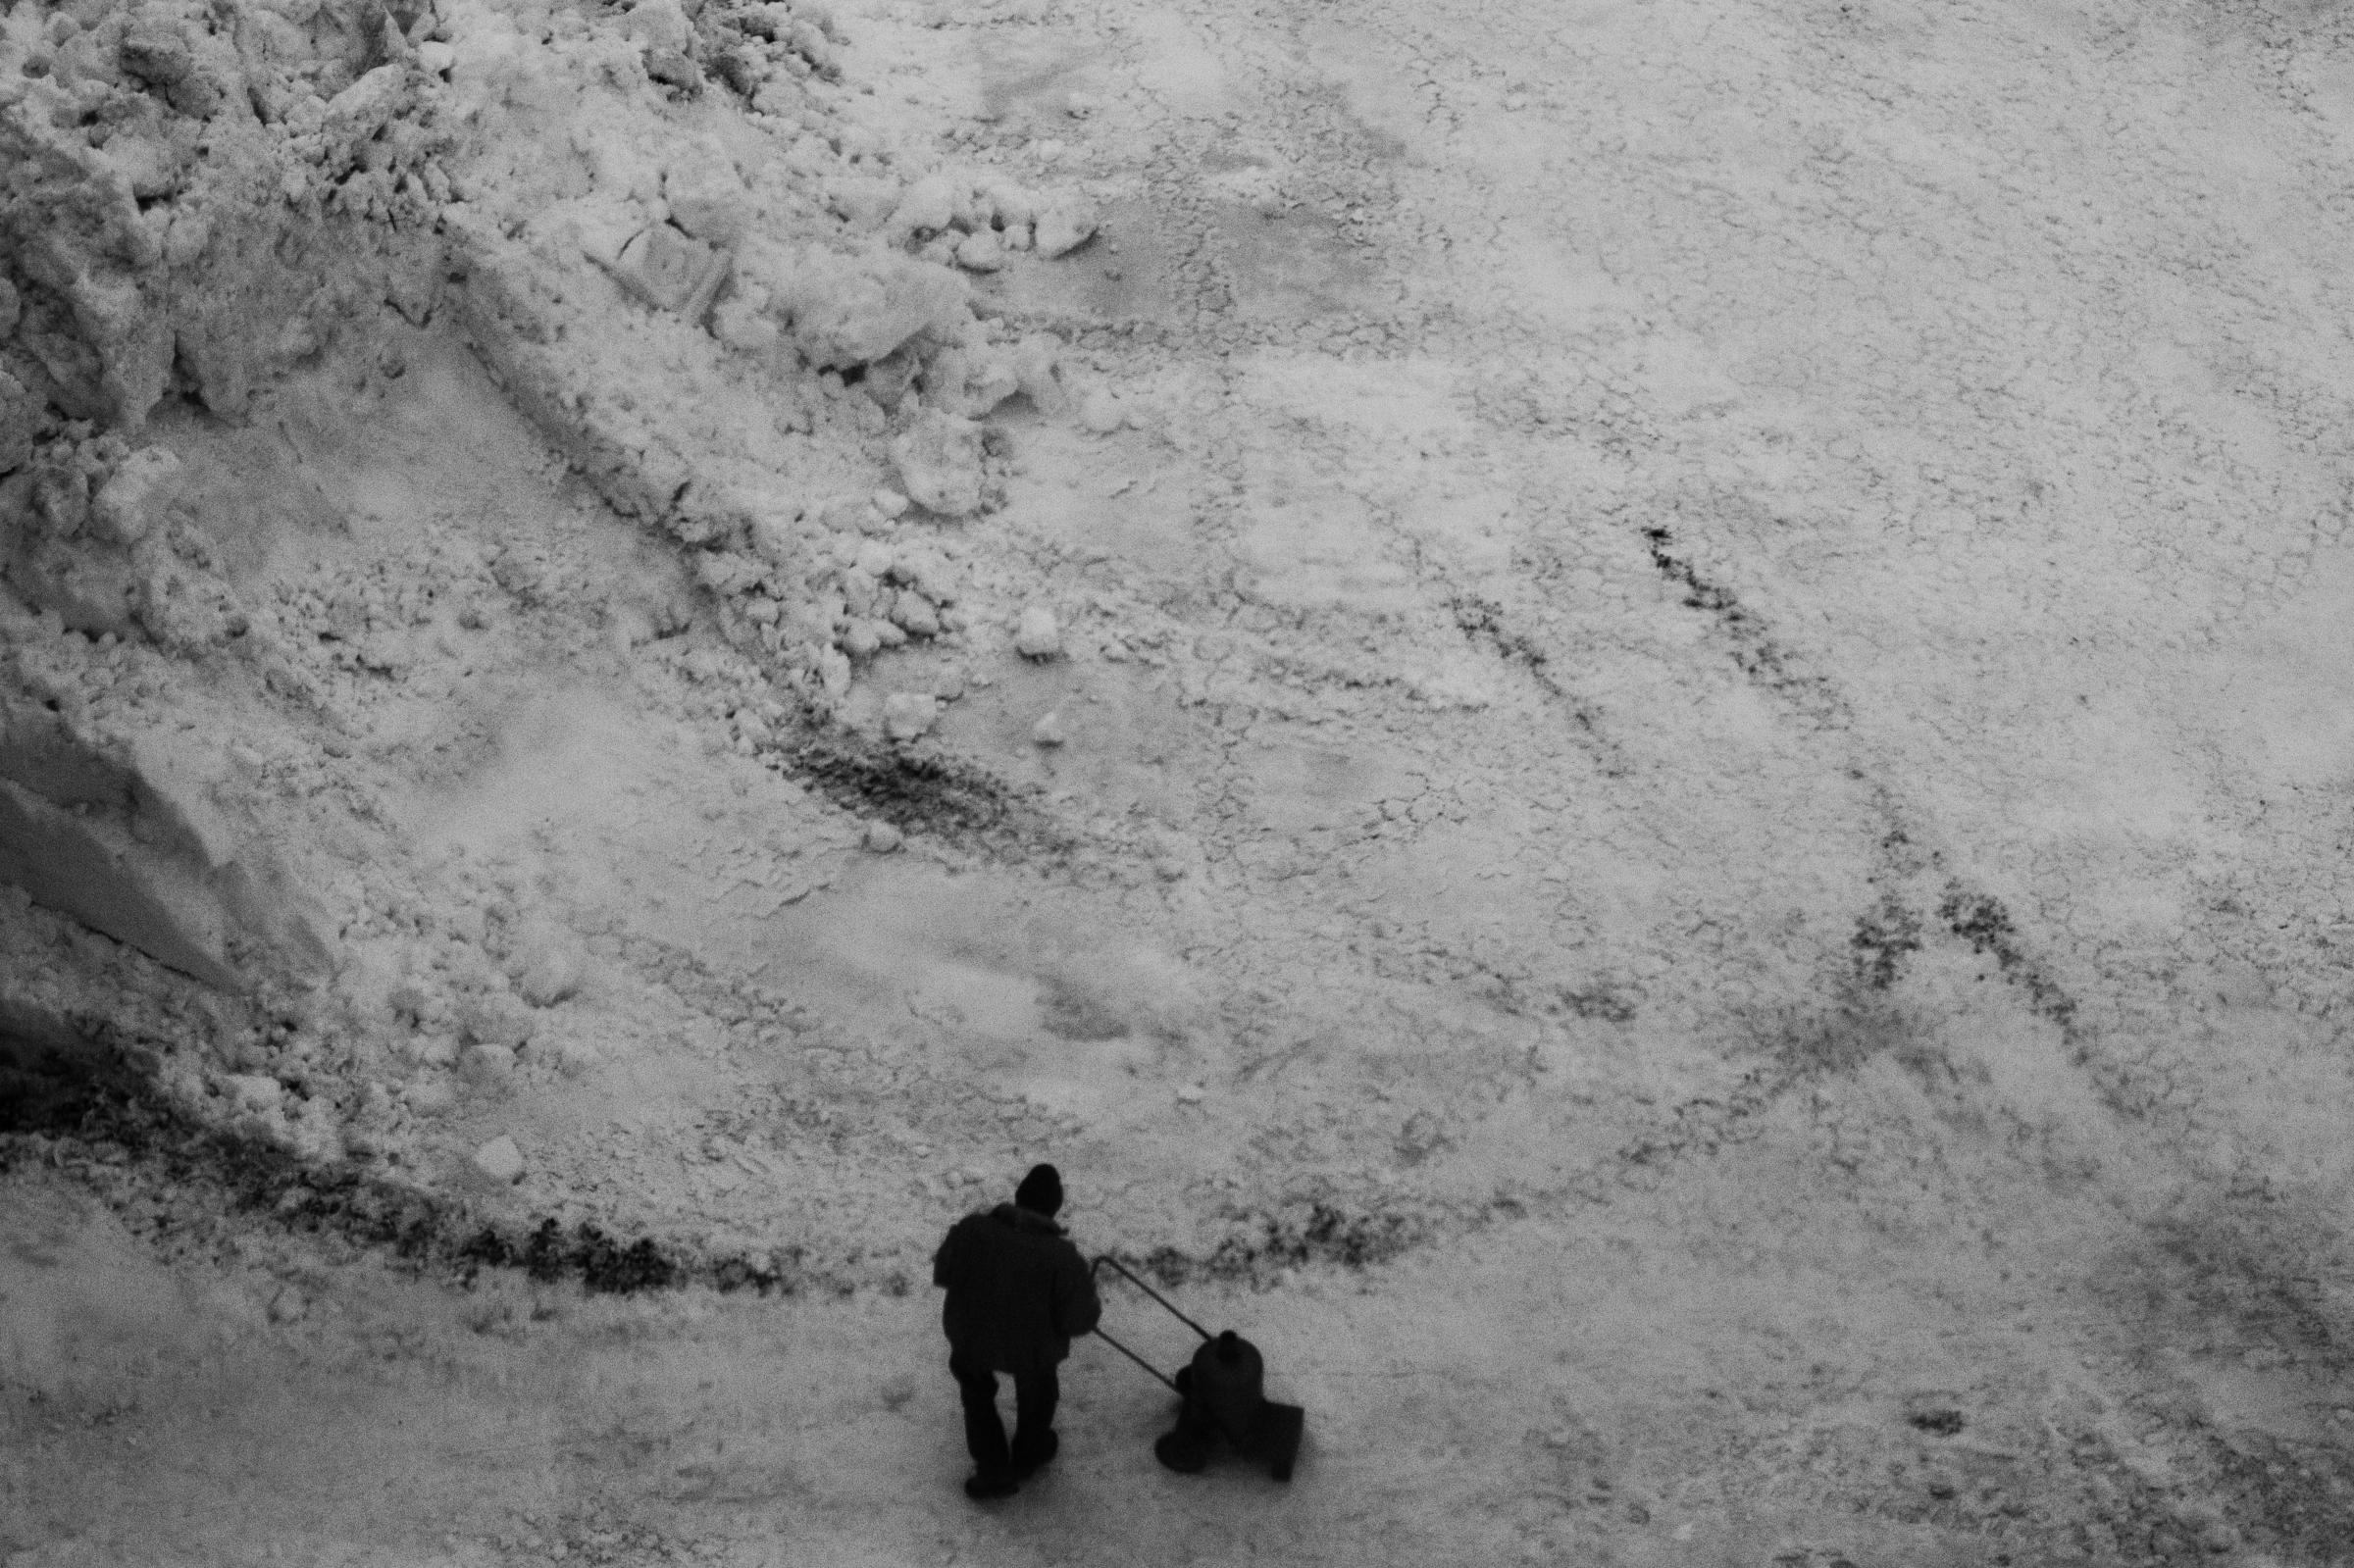 Chamonix - Man walking through the snow during winter in Chamonix